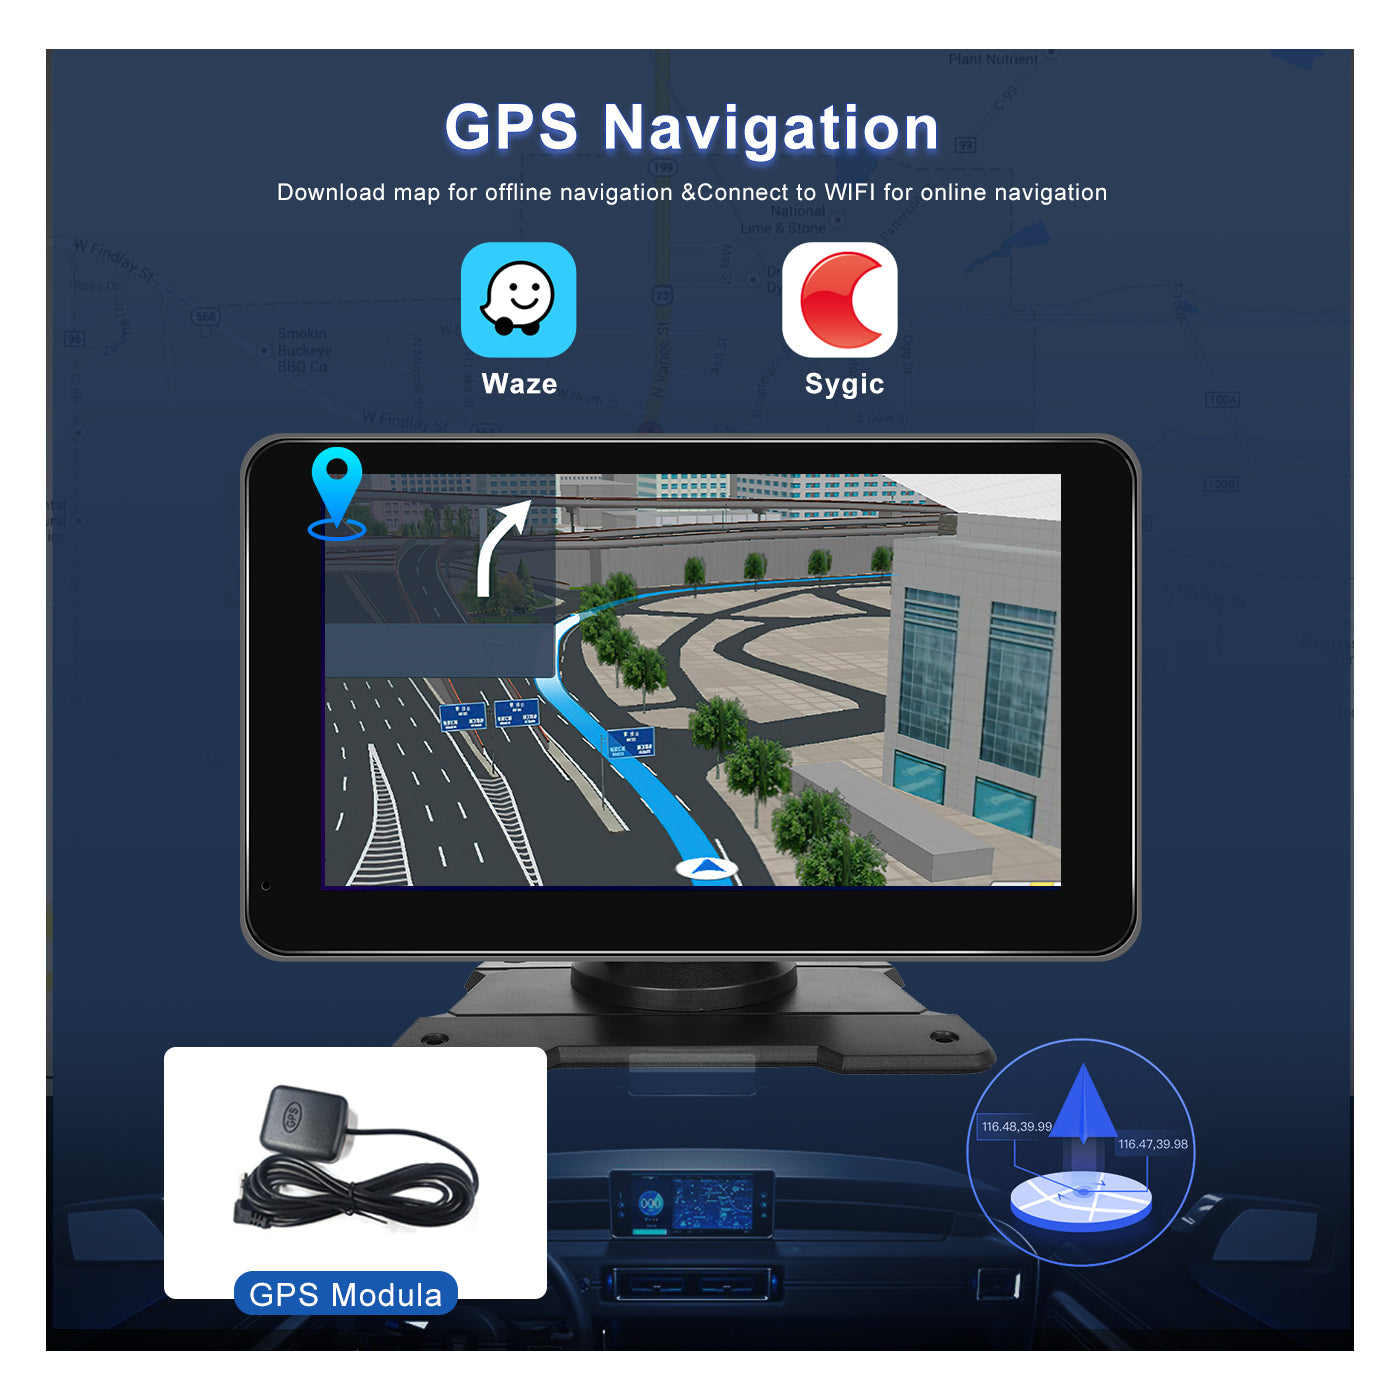 Podofo Carplay Autoradio pour Peugeot 207 2006-2015,Android 2G+32G,9 Écran  Tactile HiFi Android Auto GPS WiFi Bluetooth FM RDS Radio USB